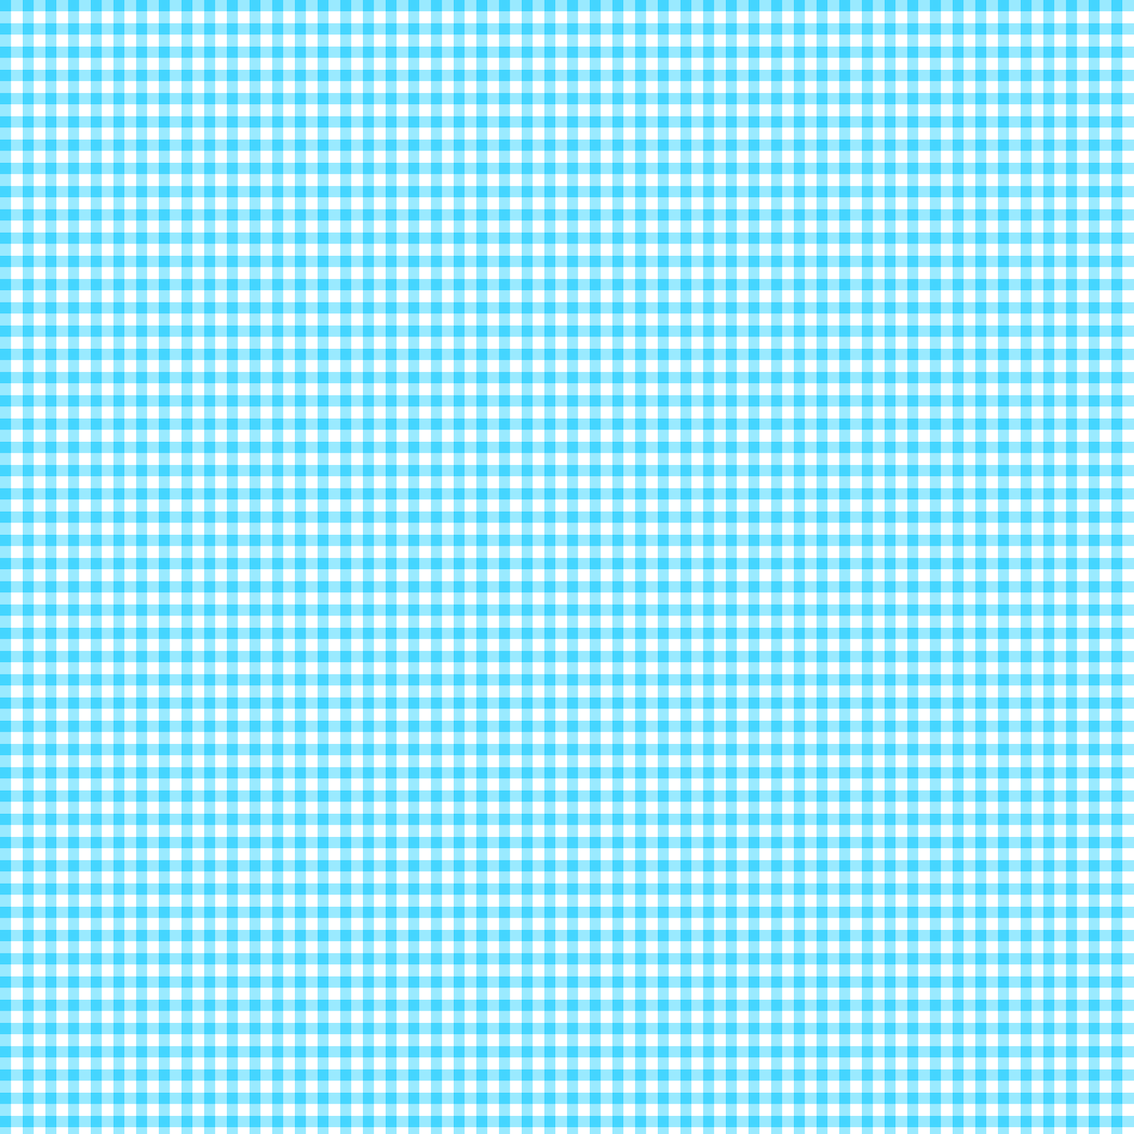 Blue and White Checkered Wallpaper - WallpaperSafari